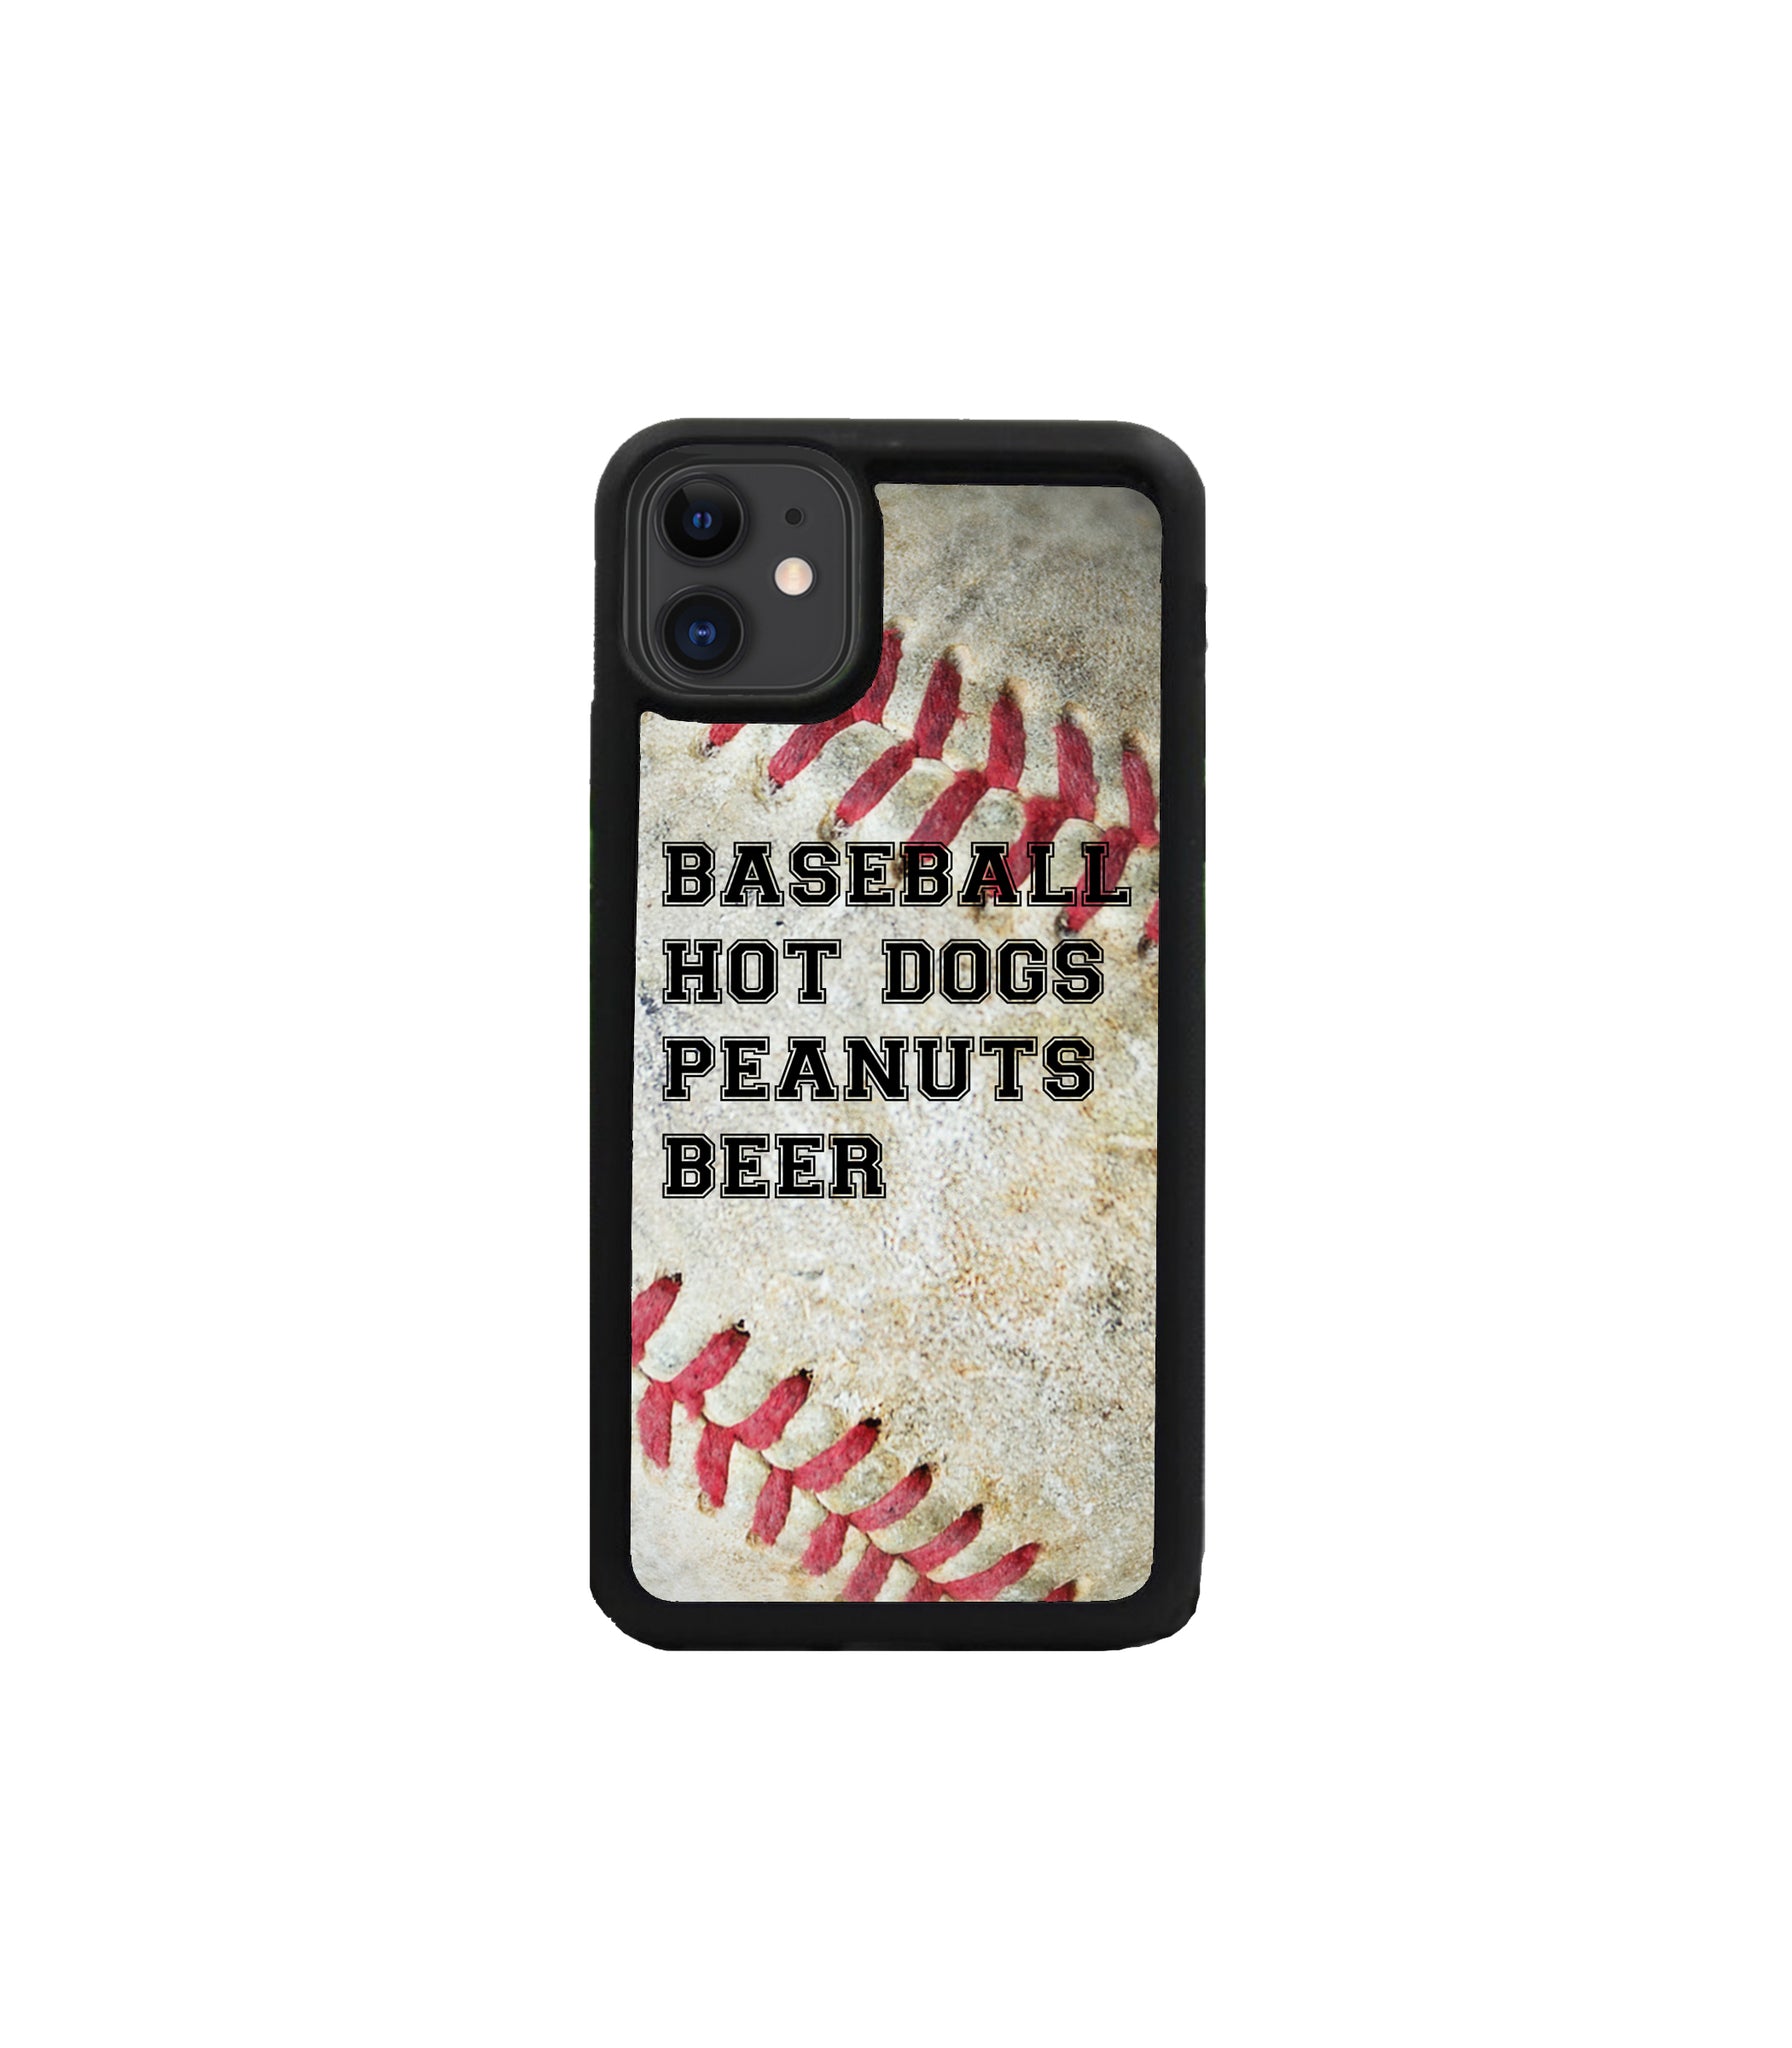 iPhone Case Samsung Galaxy - Baseball Case